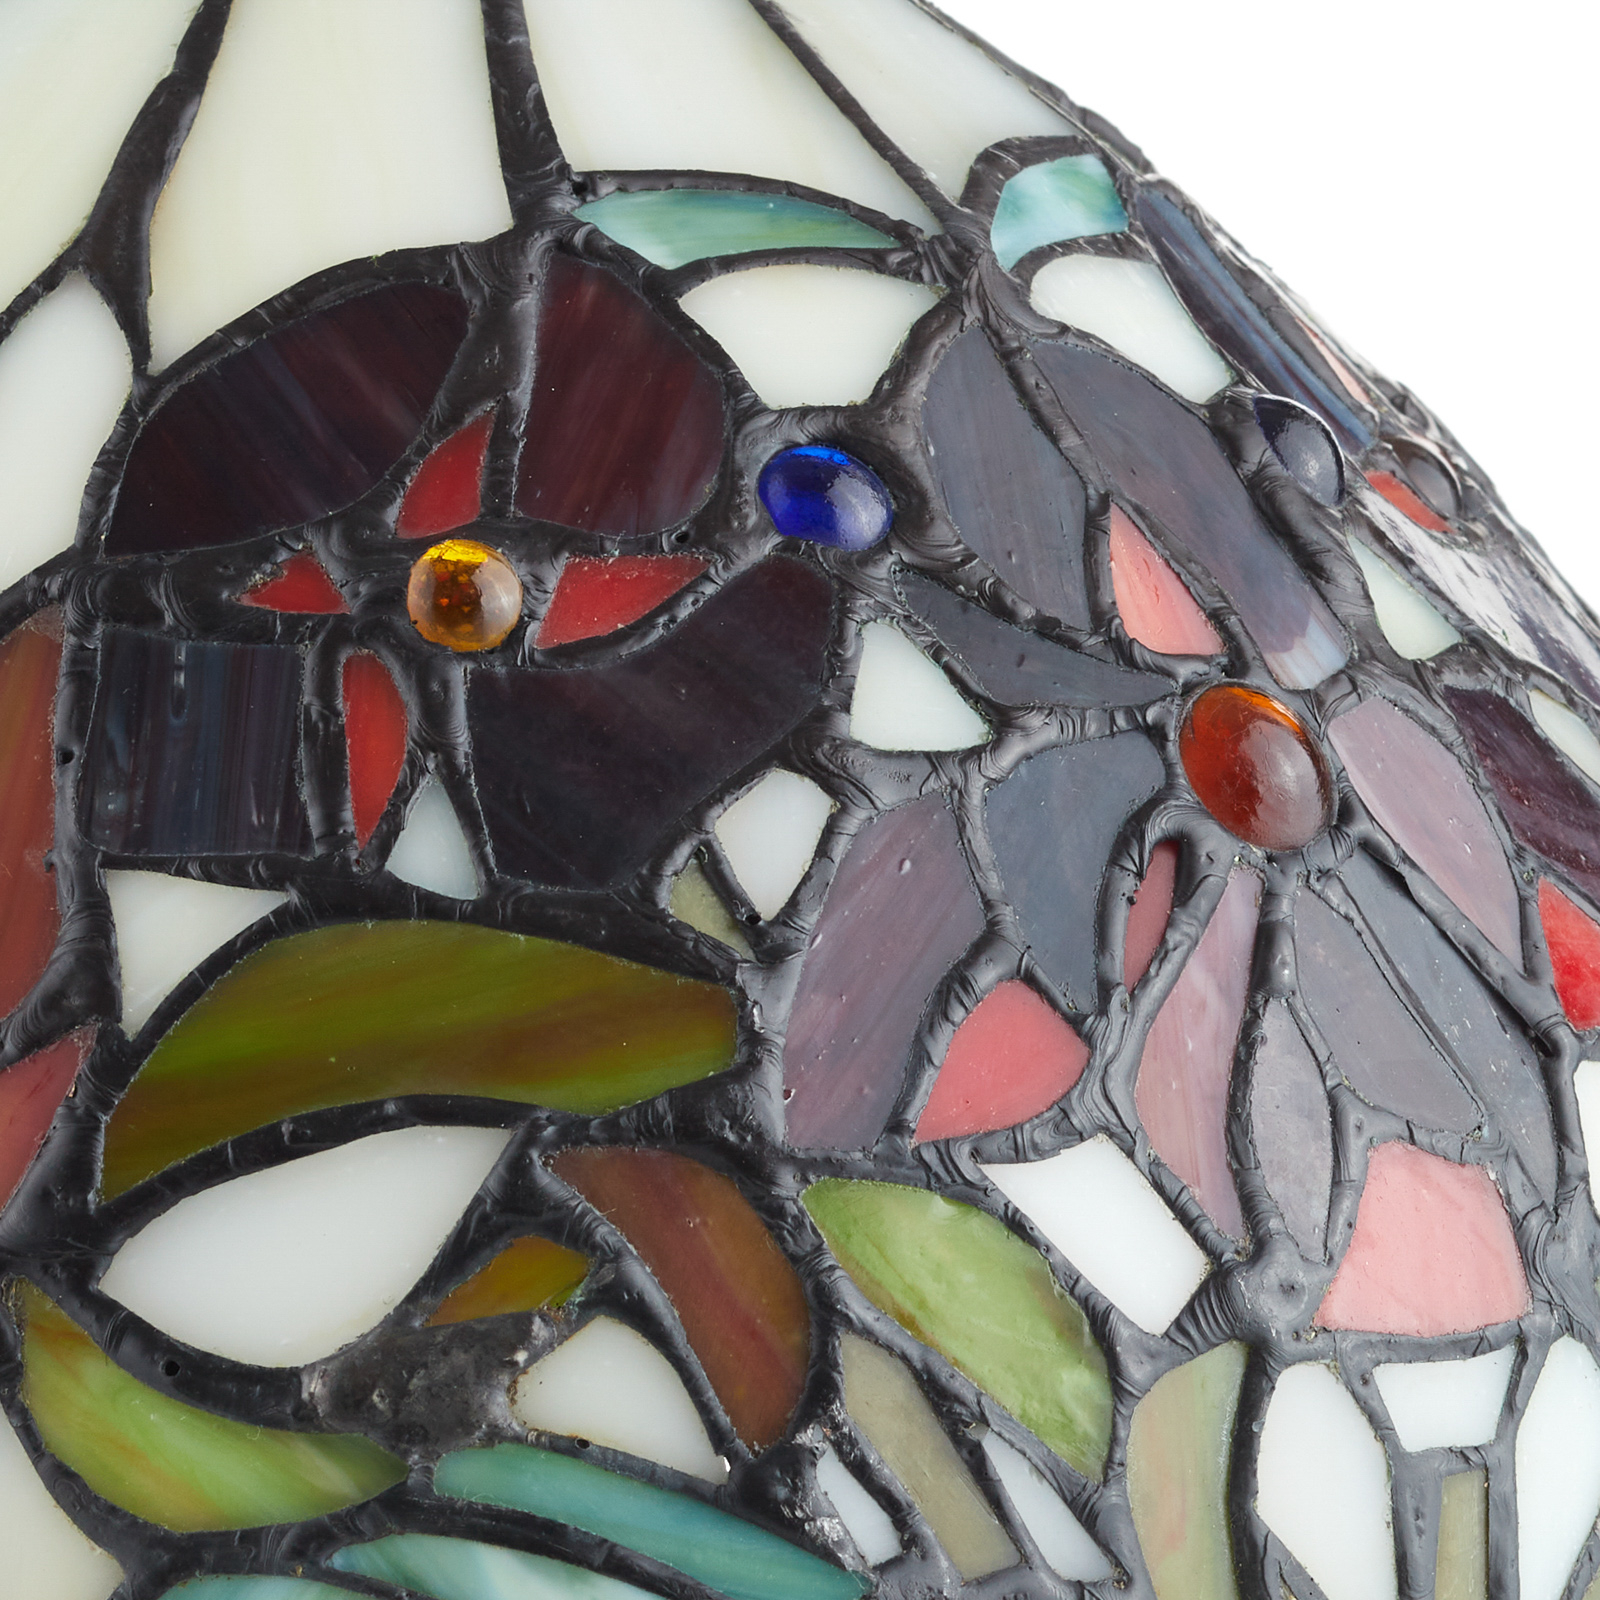 ELINE classic Tiffany style table lamp, 40 cm